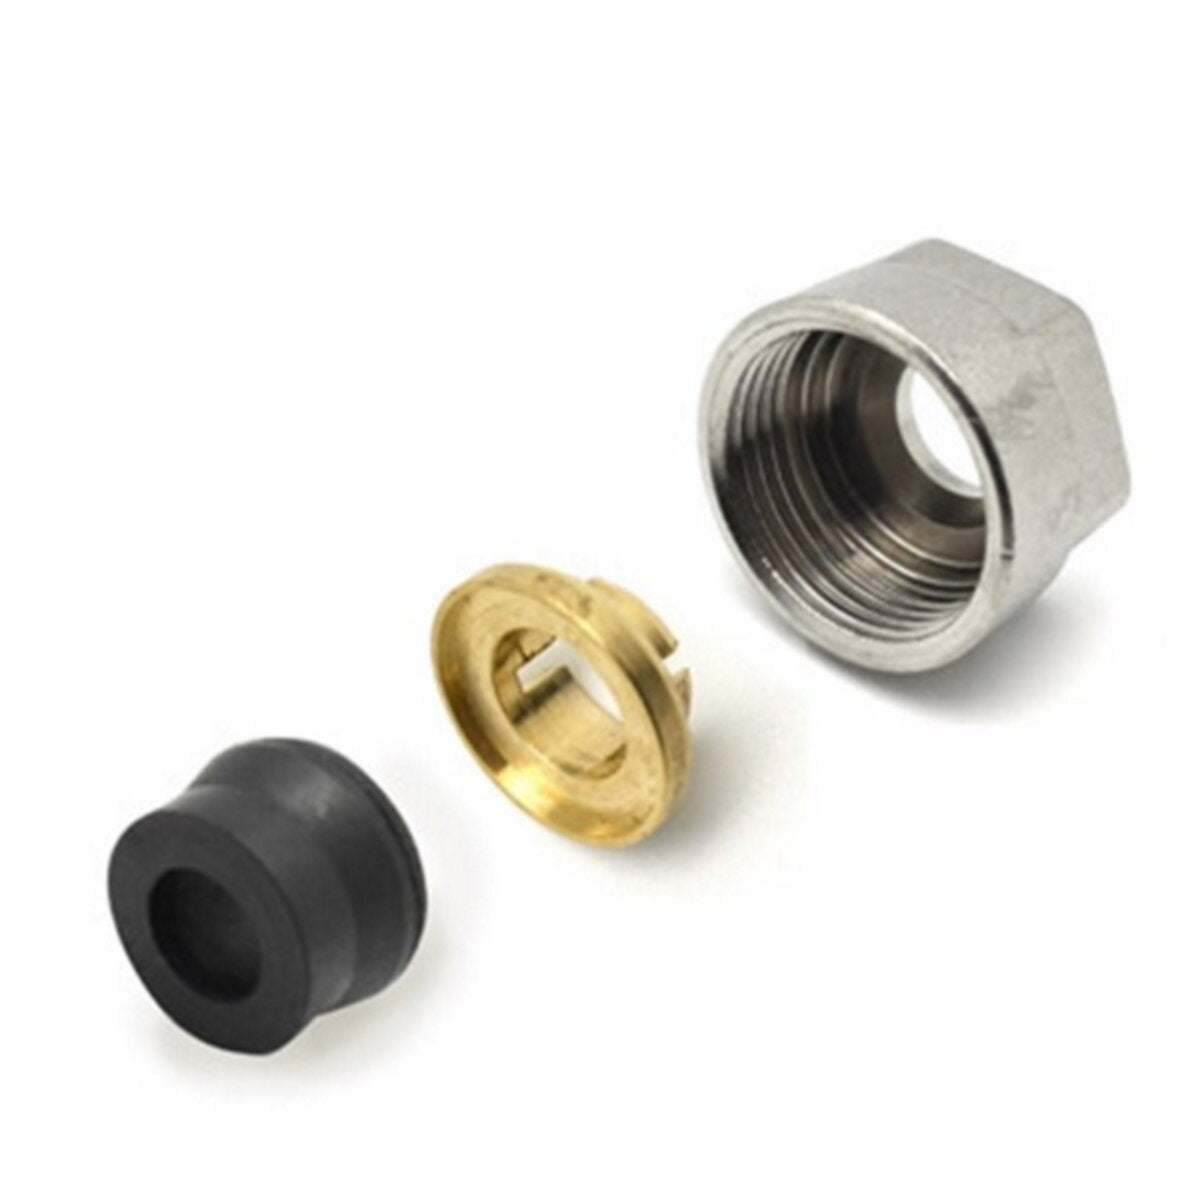 Chrome-plated rubber lockshield valve fitting for 14x2 copper pipe for Ercos lockshield valves